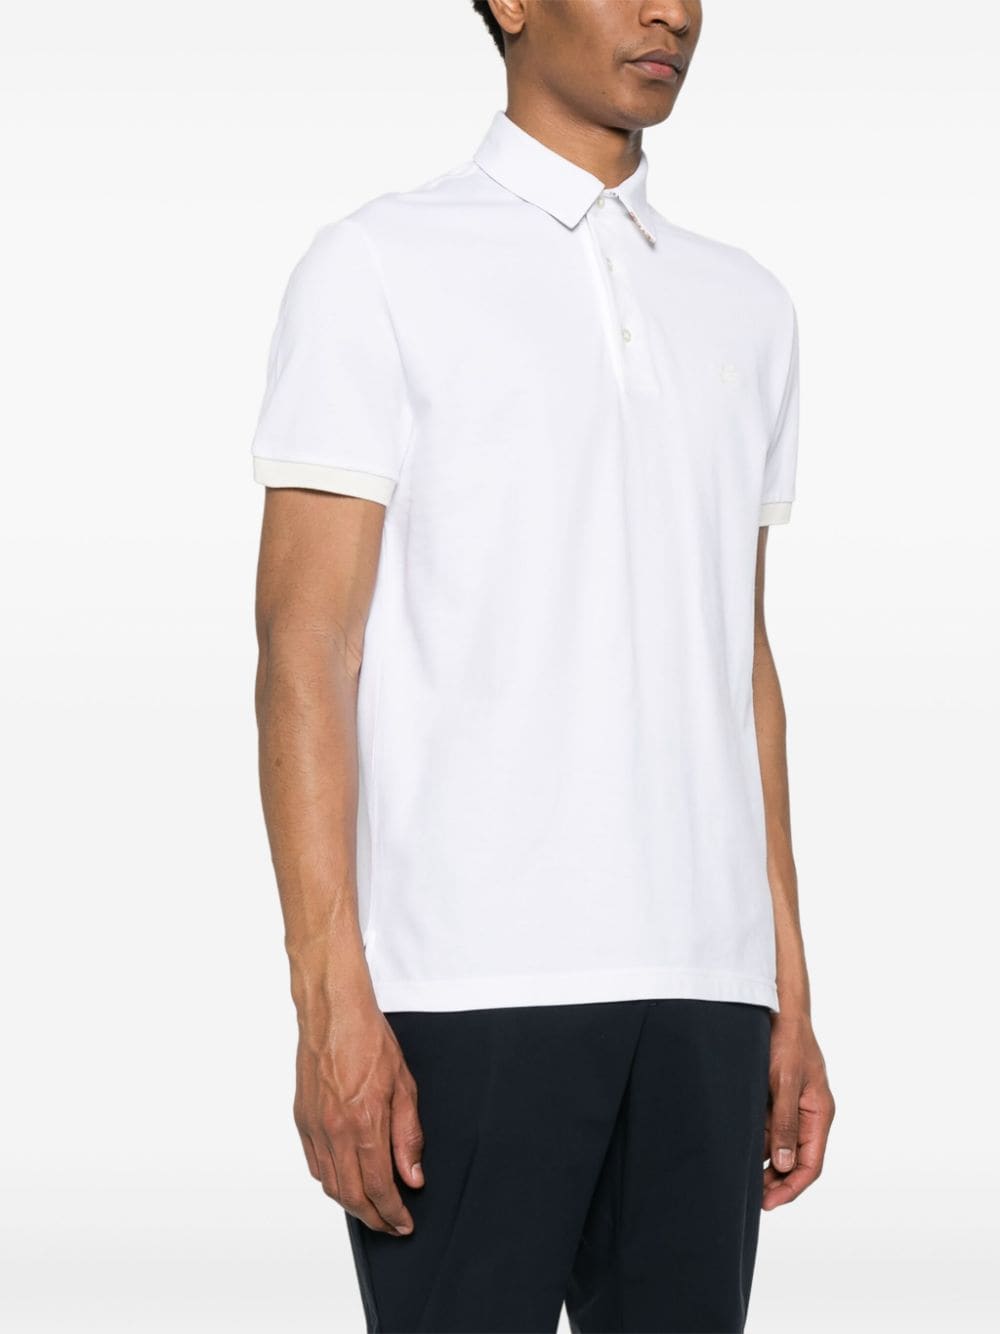 Pegaso-embroidered cotton polo shirt<BR/><BR/><BR/>